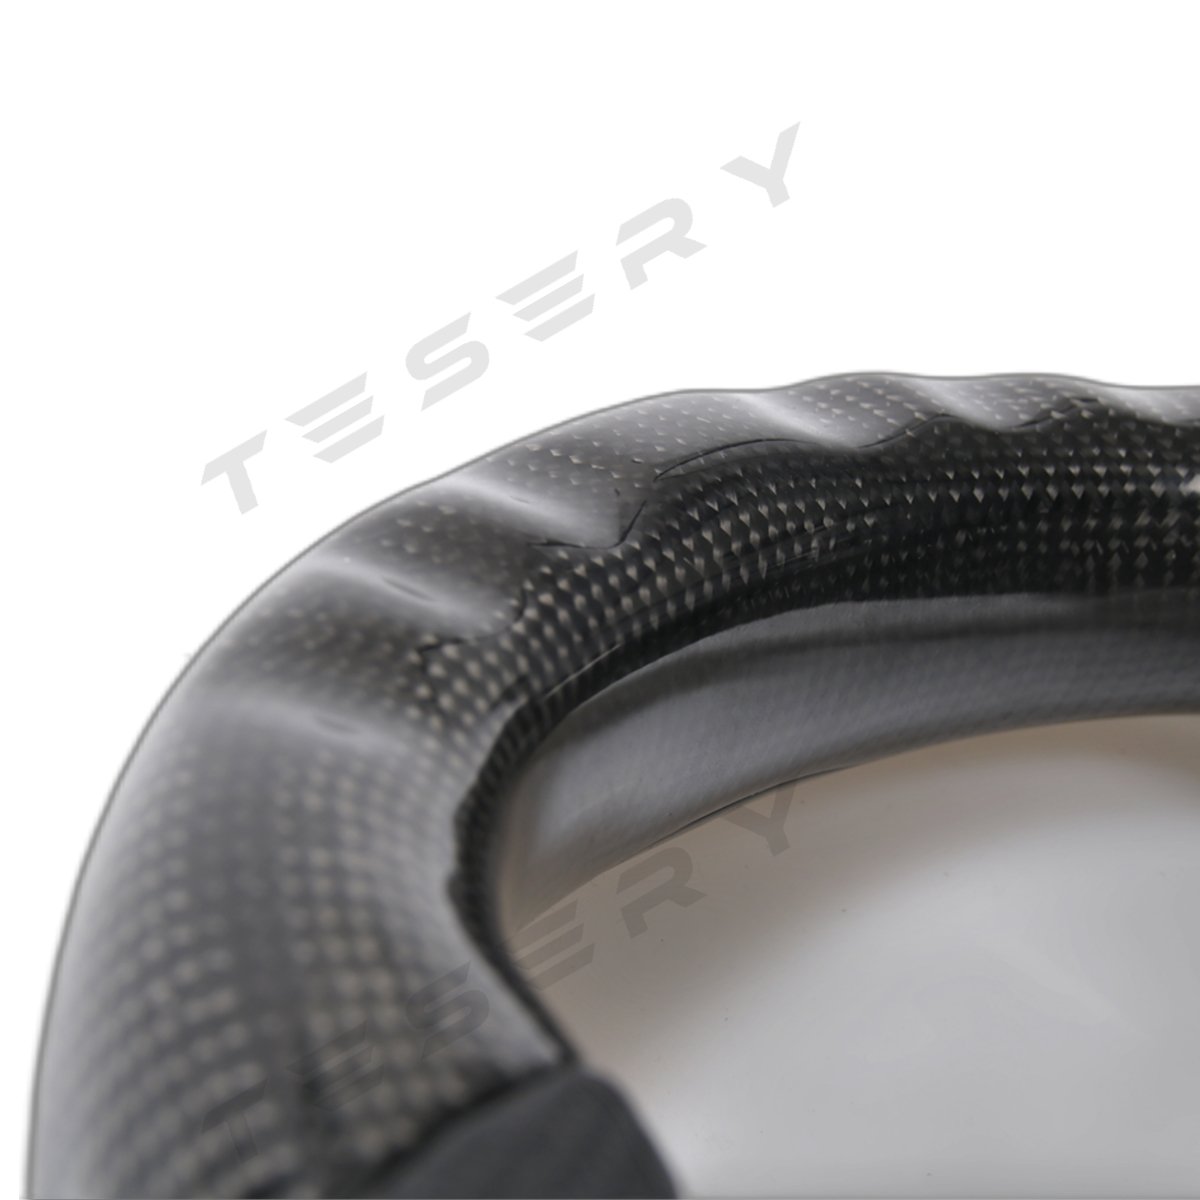 Model 3 / Y LED Sport Carbon Fiber Steering Wheel 【Style 4】 - Tesery Official Store